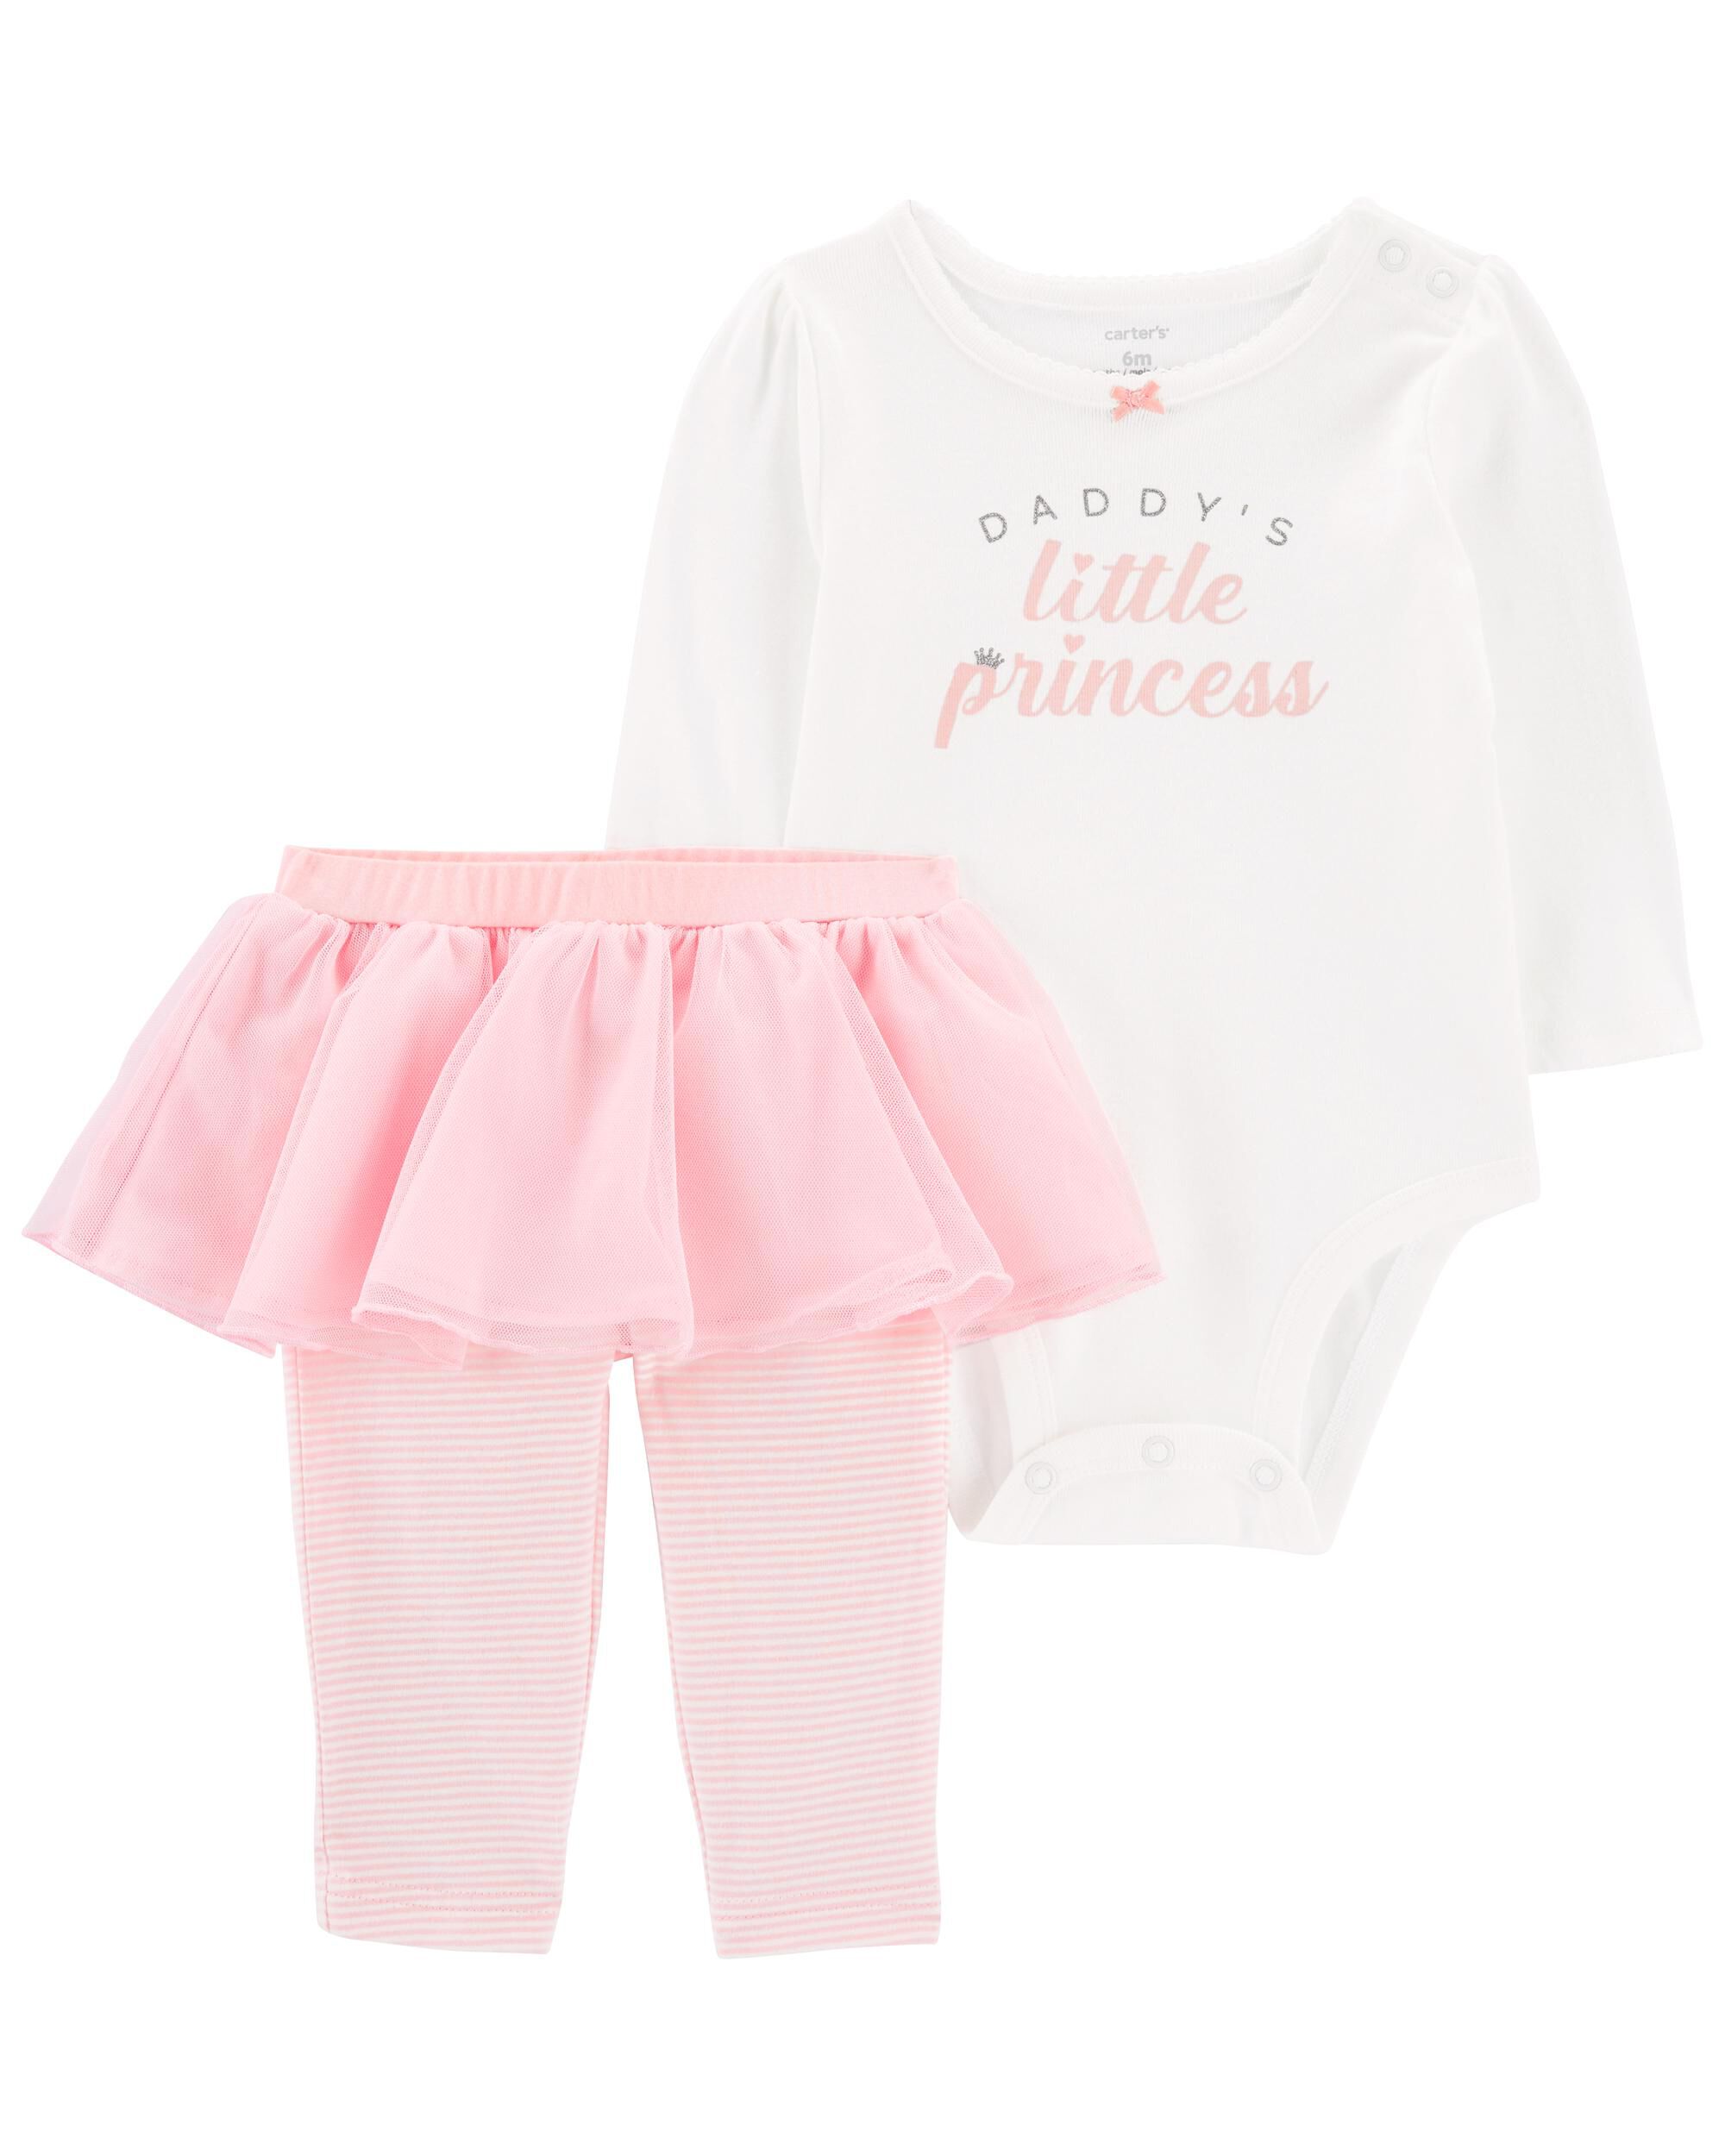 Carters 2-Piece Daddys Little Princess Bodysuit & Tutu Pant Set